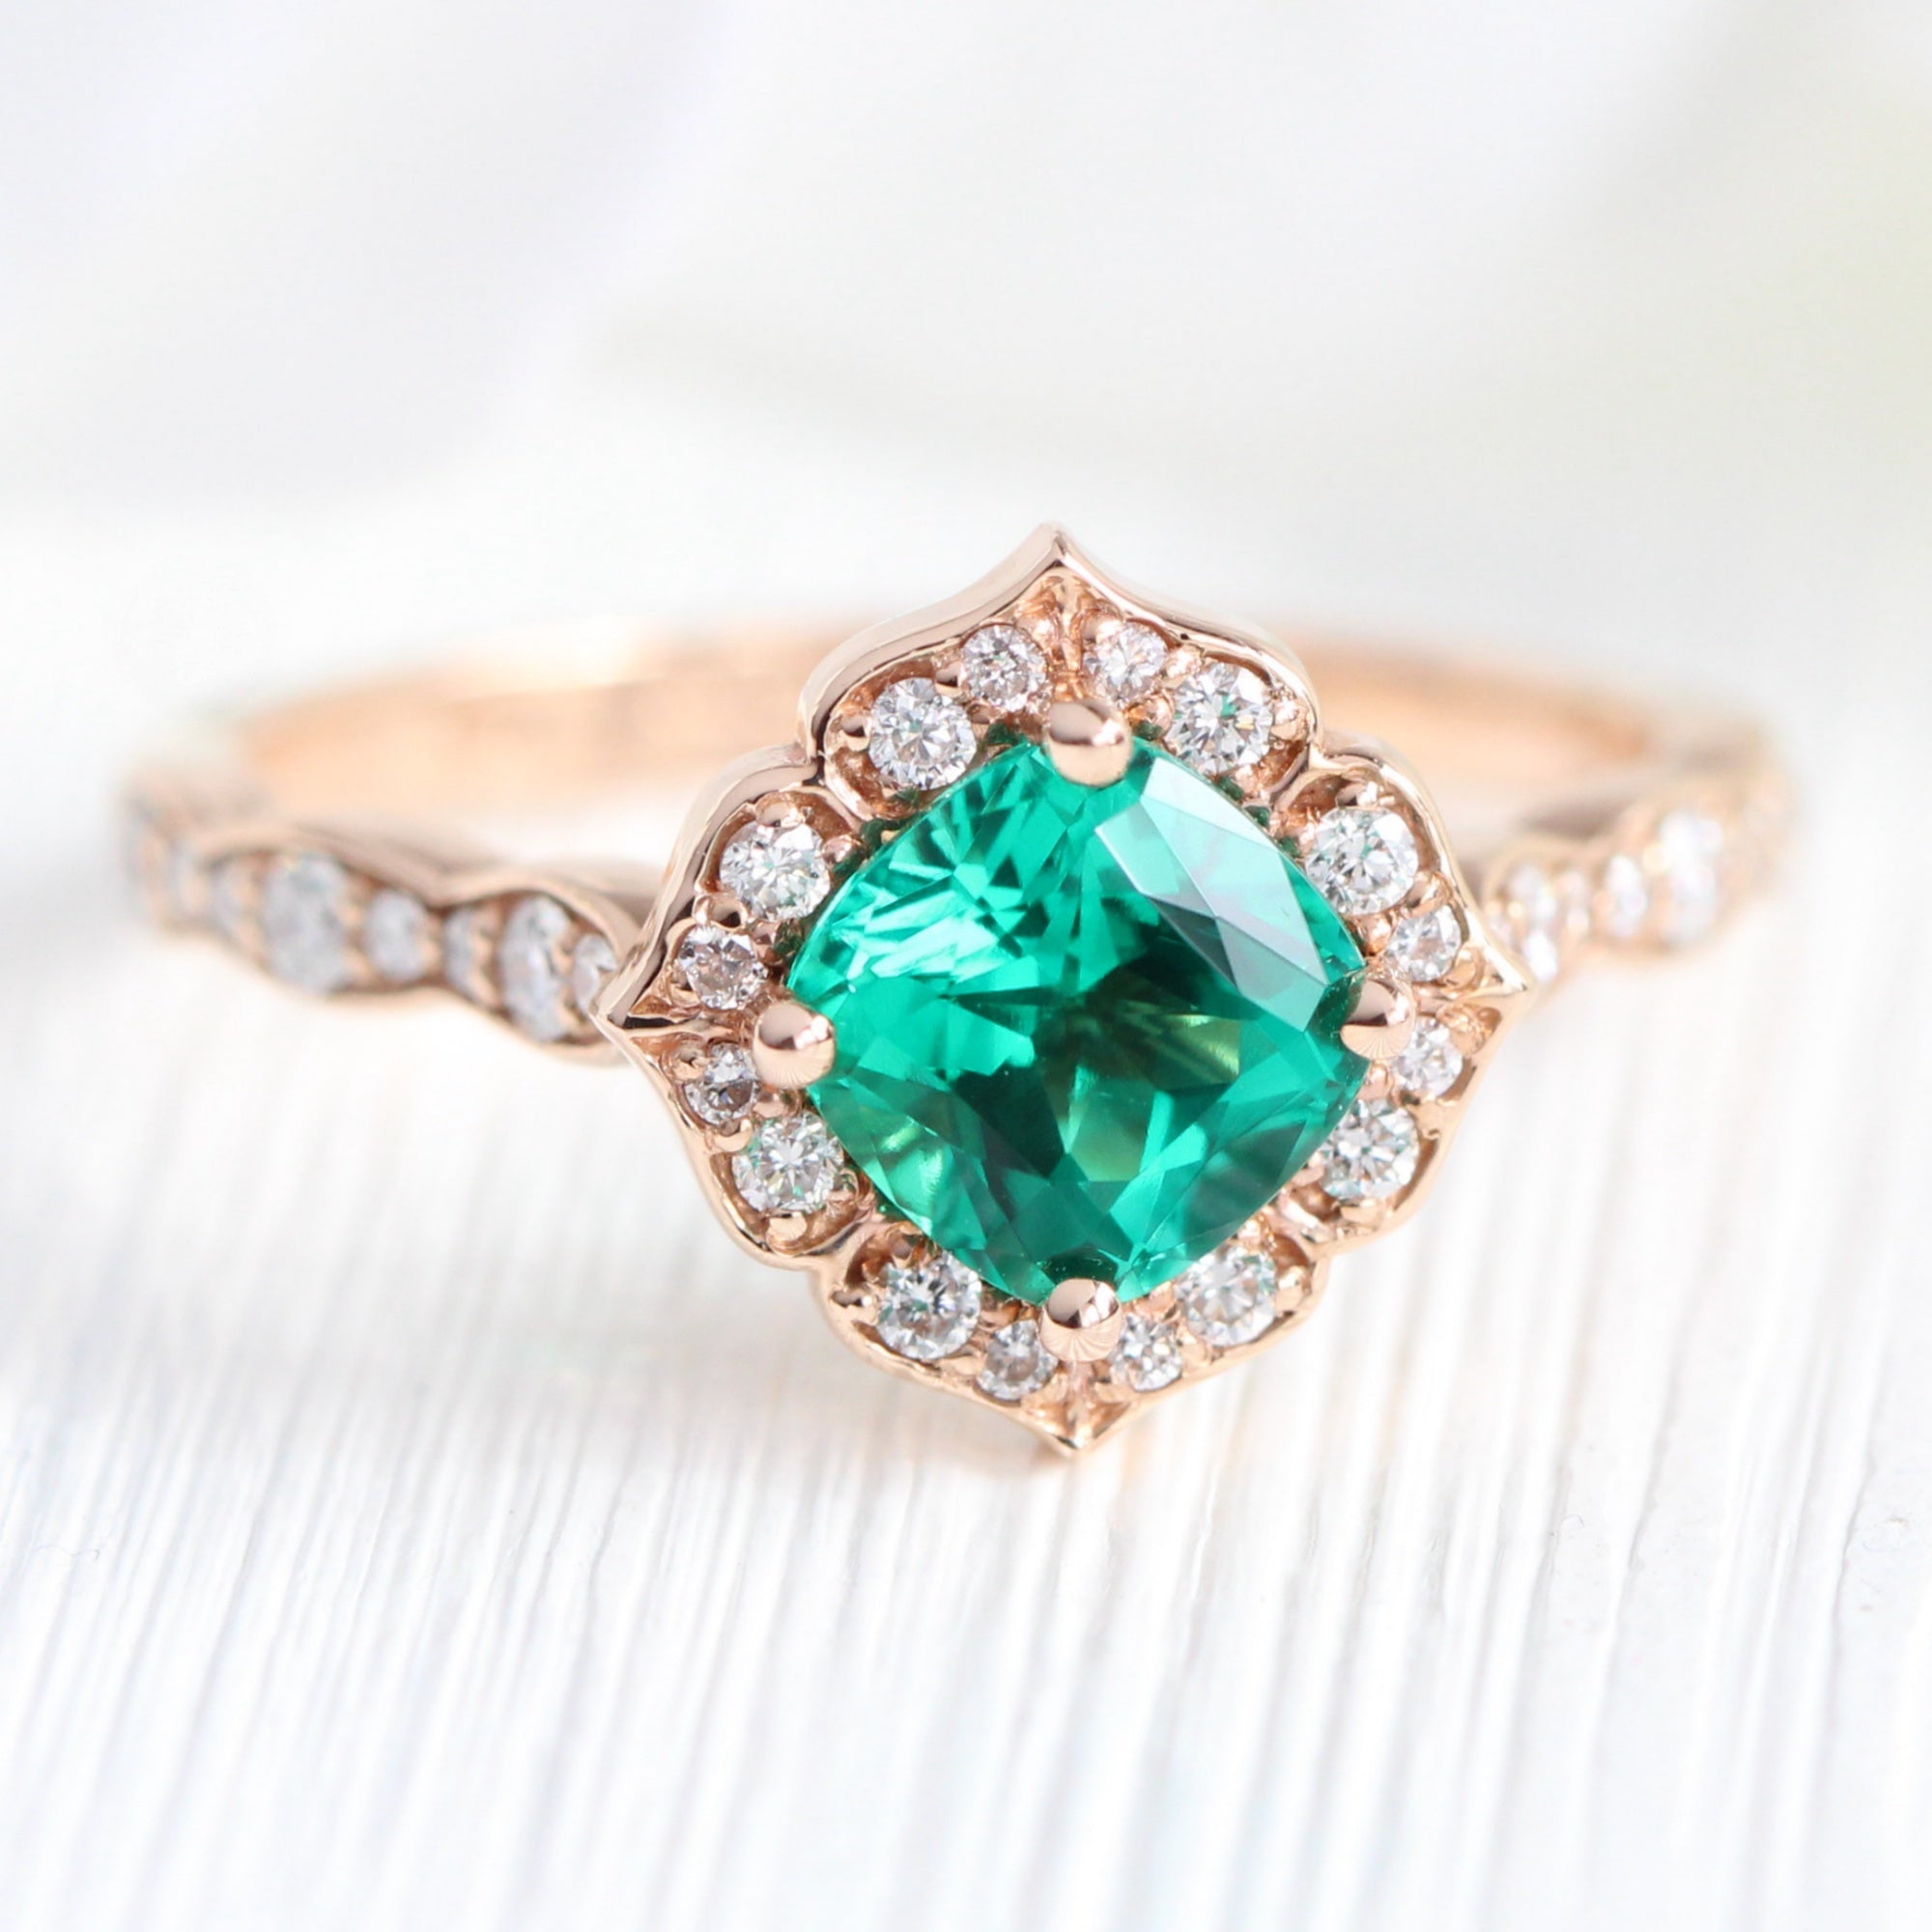 Vintage halo emerald engagement ring and u diamond wedding band la more design jewelry